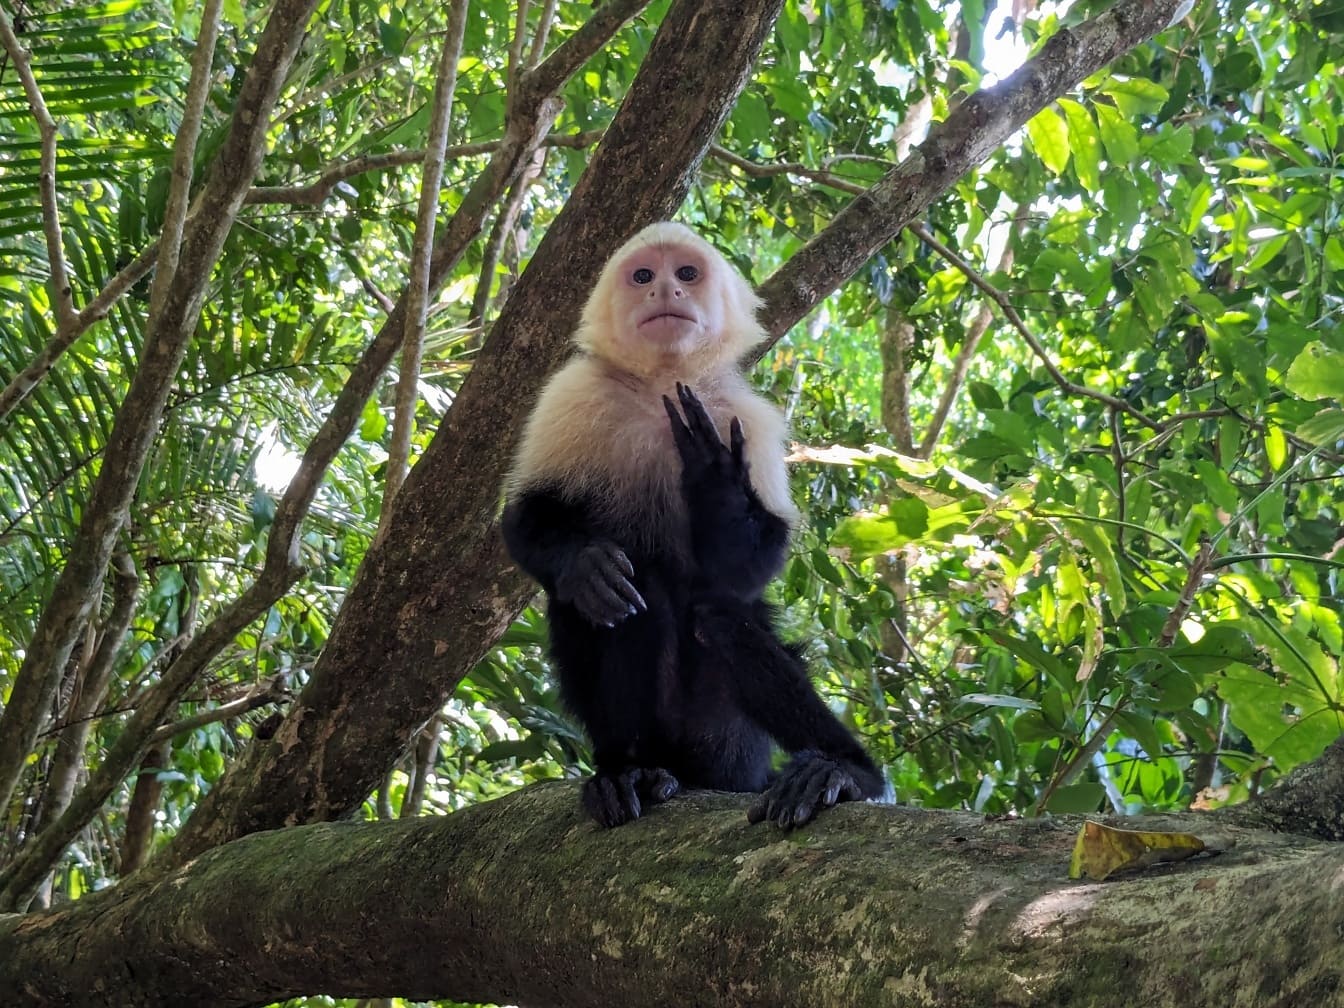 Panamai fehér arcú kapucinus (Cebus imitator) faágon ülő majom